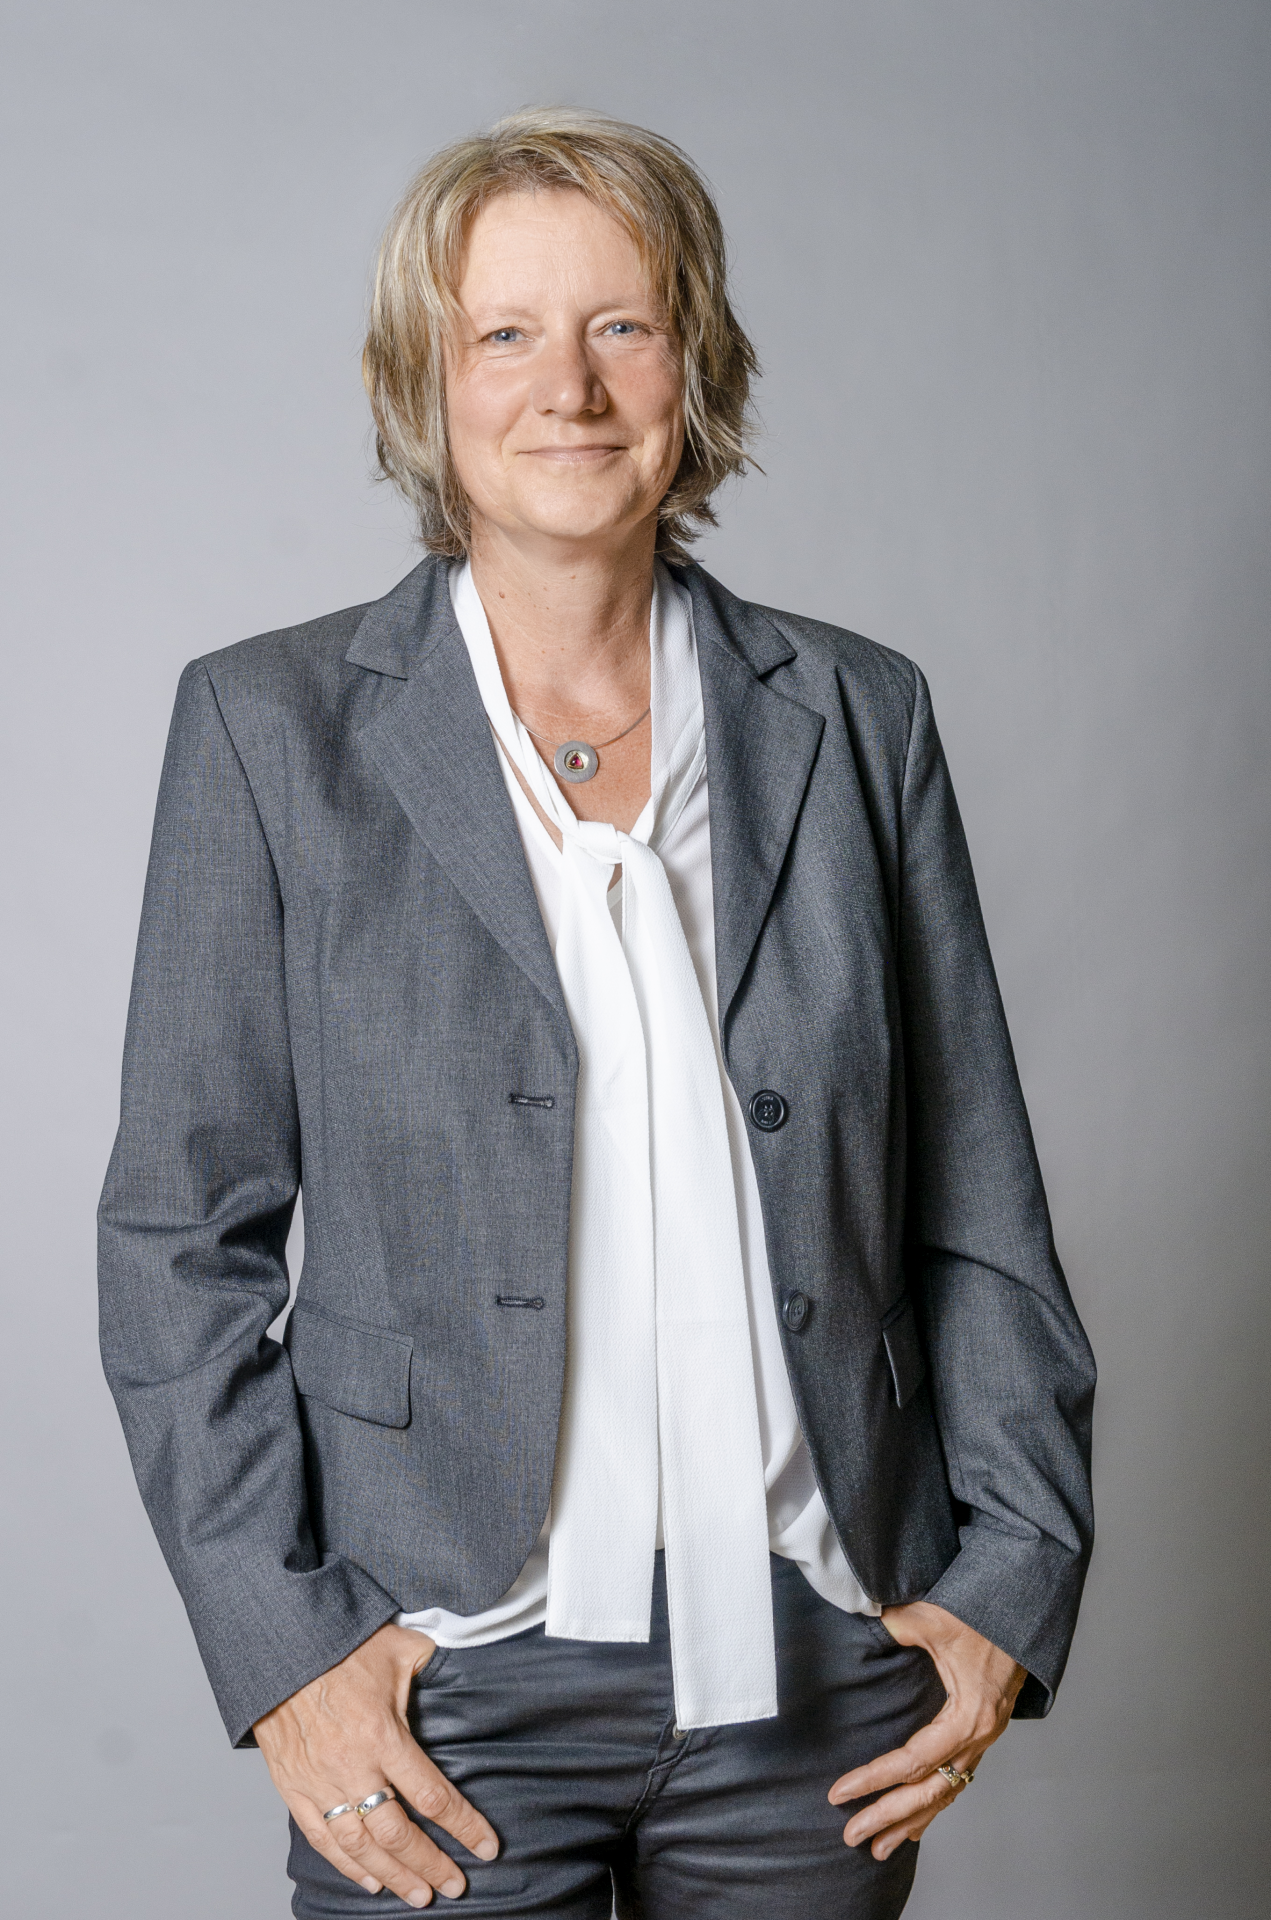 Karin Terhorst